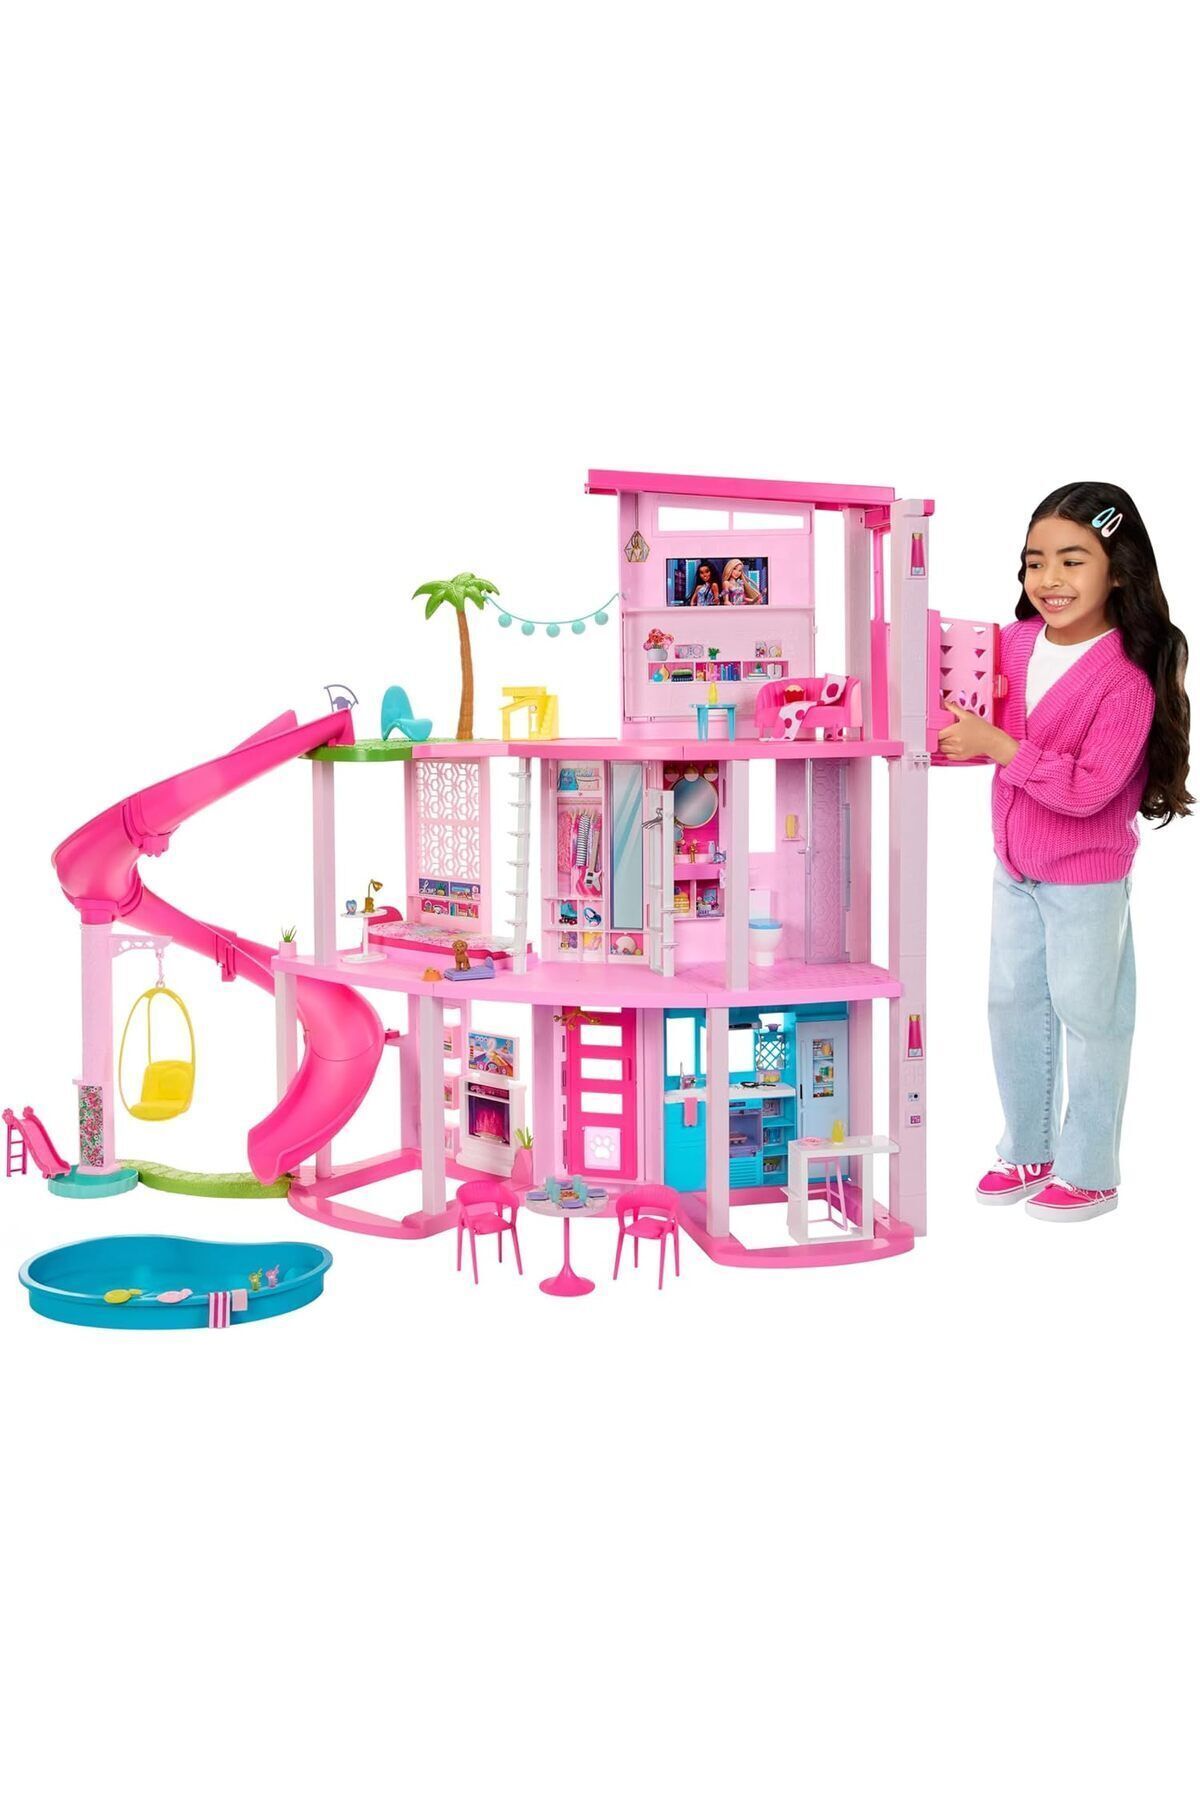 Cici Oyuncak Pool Party Doll House Barbie Dev Büyük Rüya Evi New Series